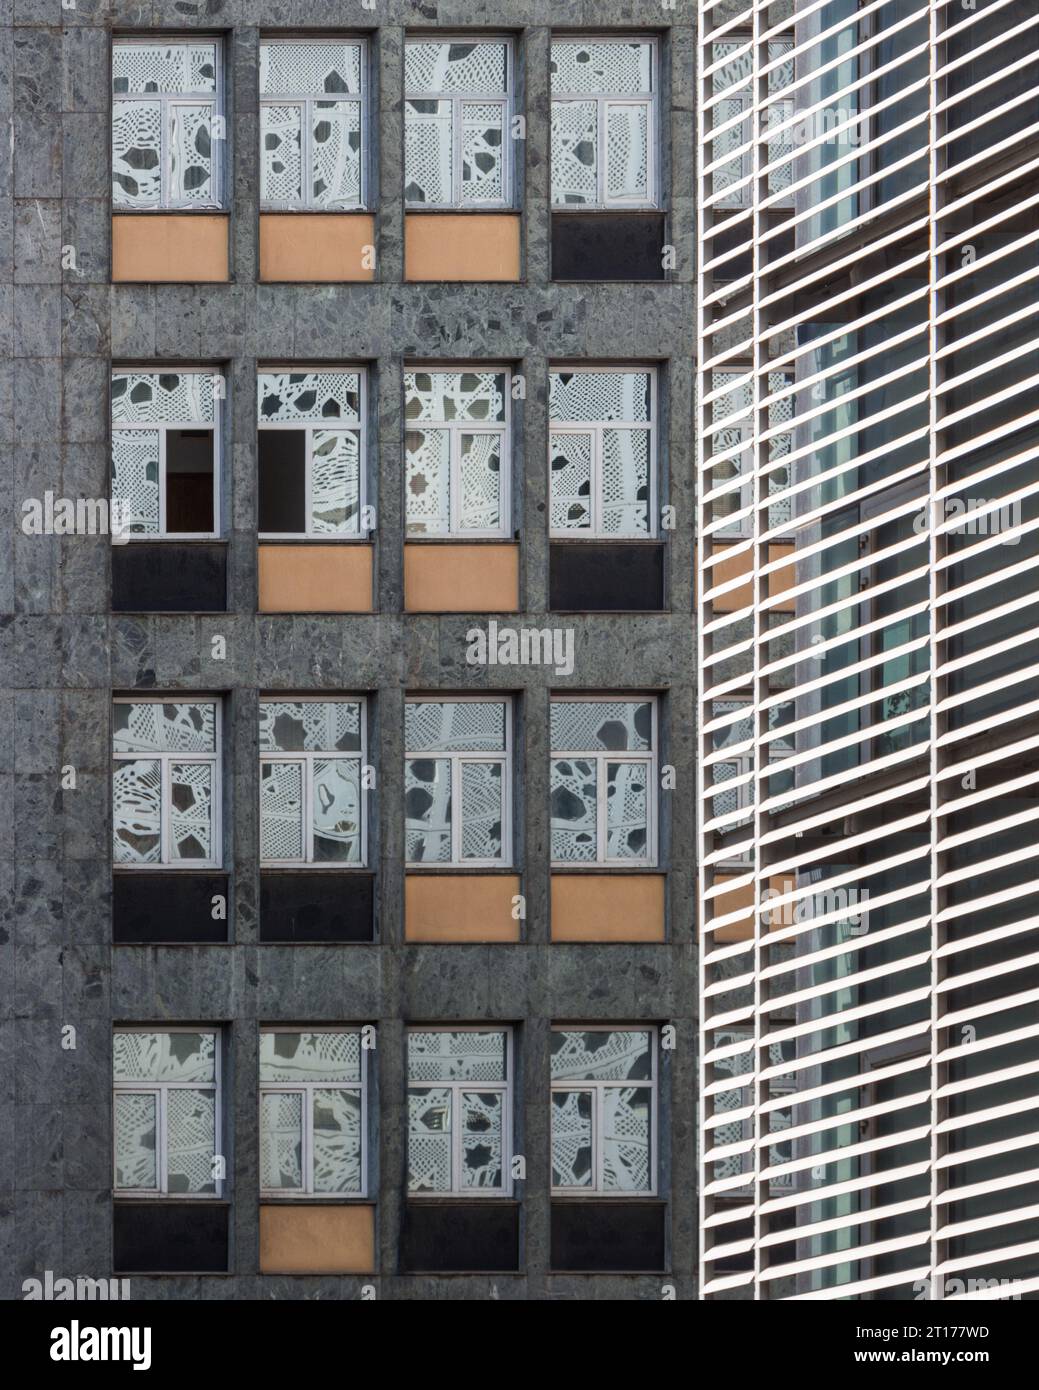 Abstract modern architecture facade Stock Photo